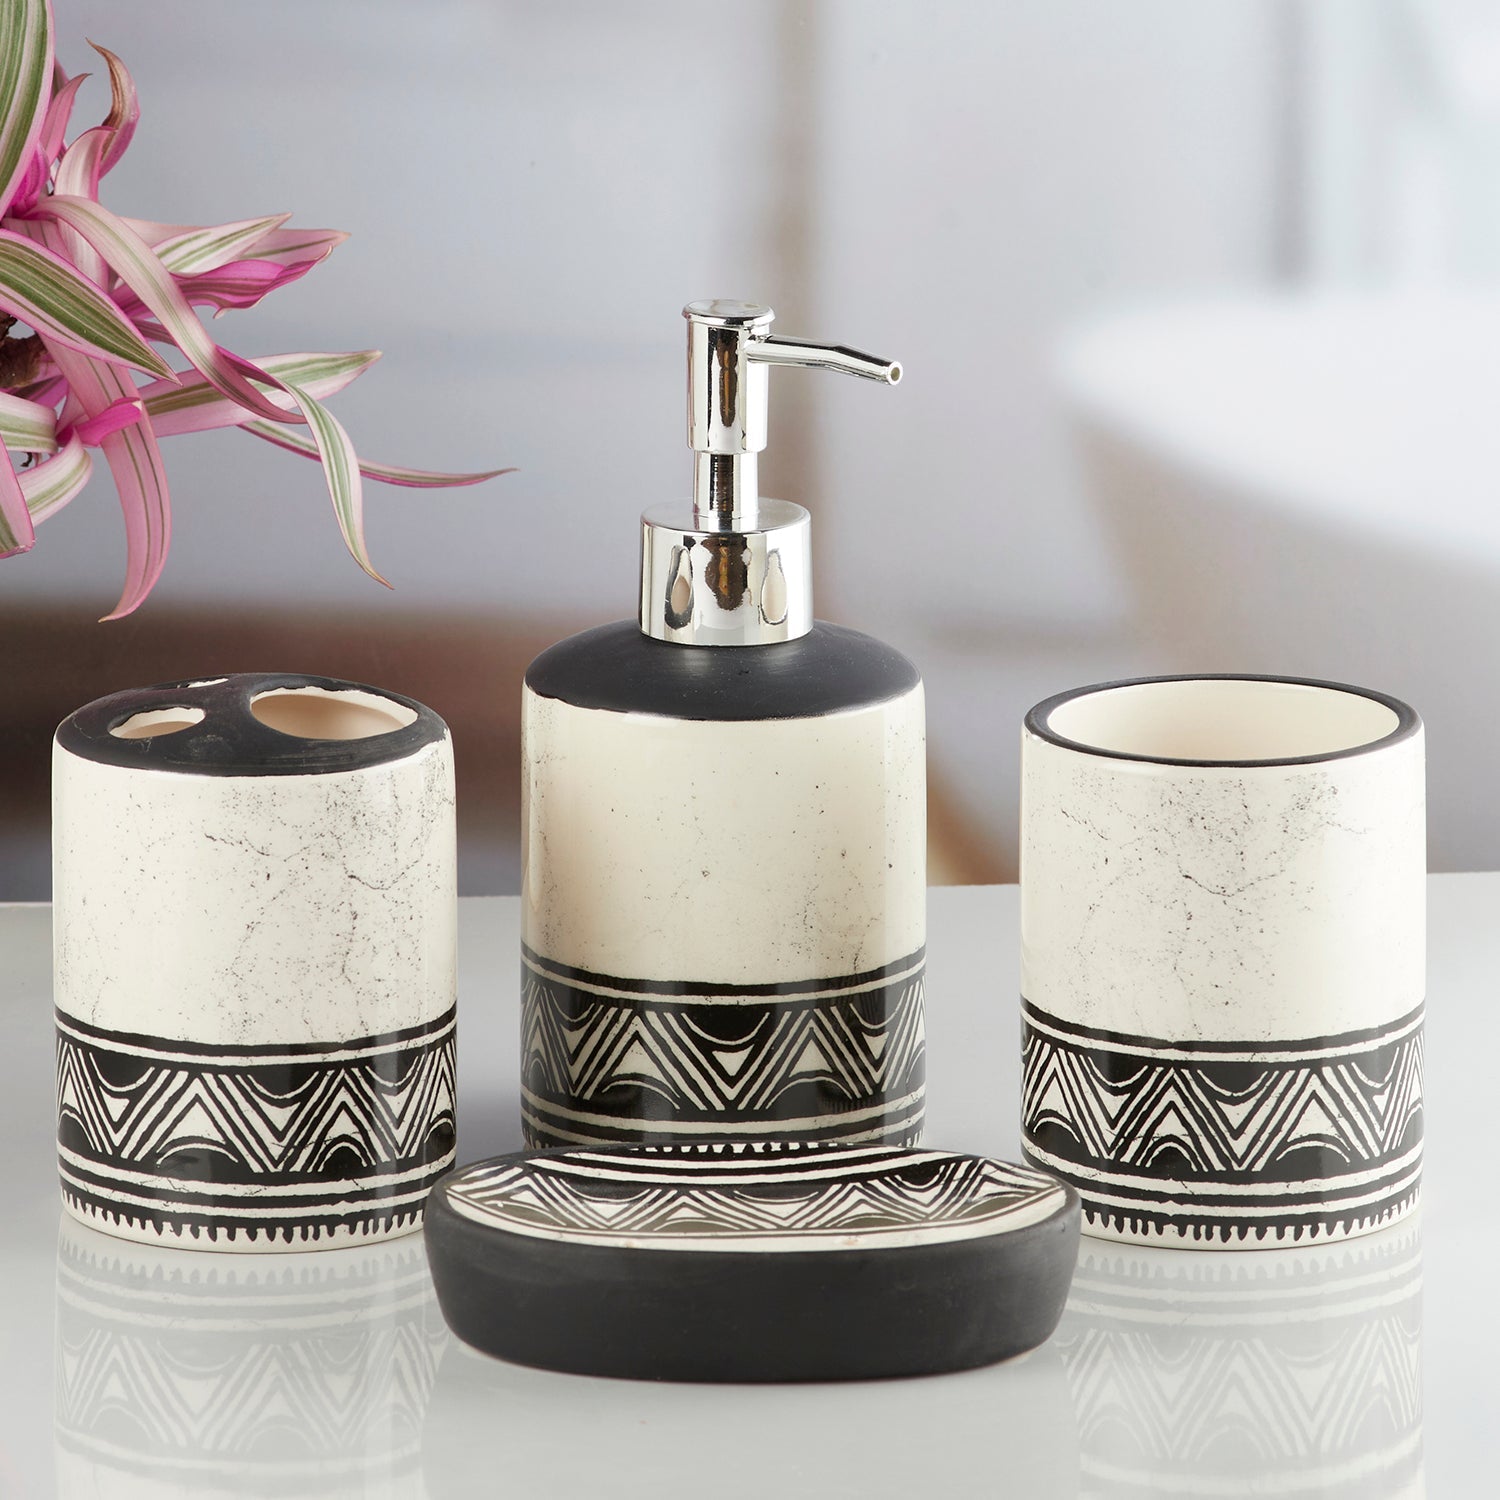 Ceramic Bathroom Accessories Set of 4 Bath Set with Soap Dispenser (8476)